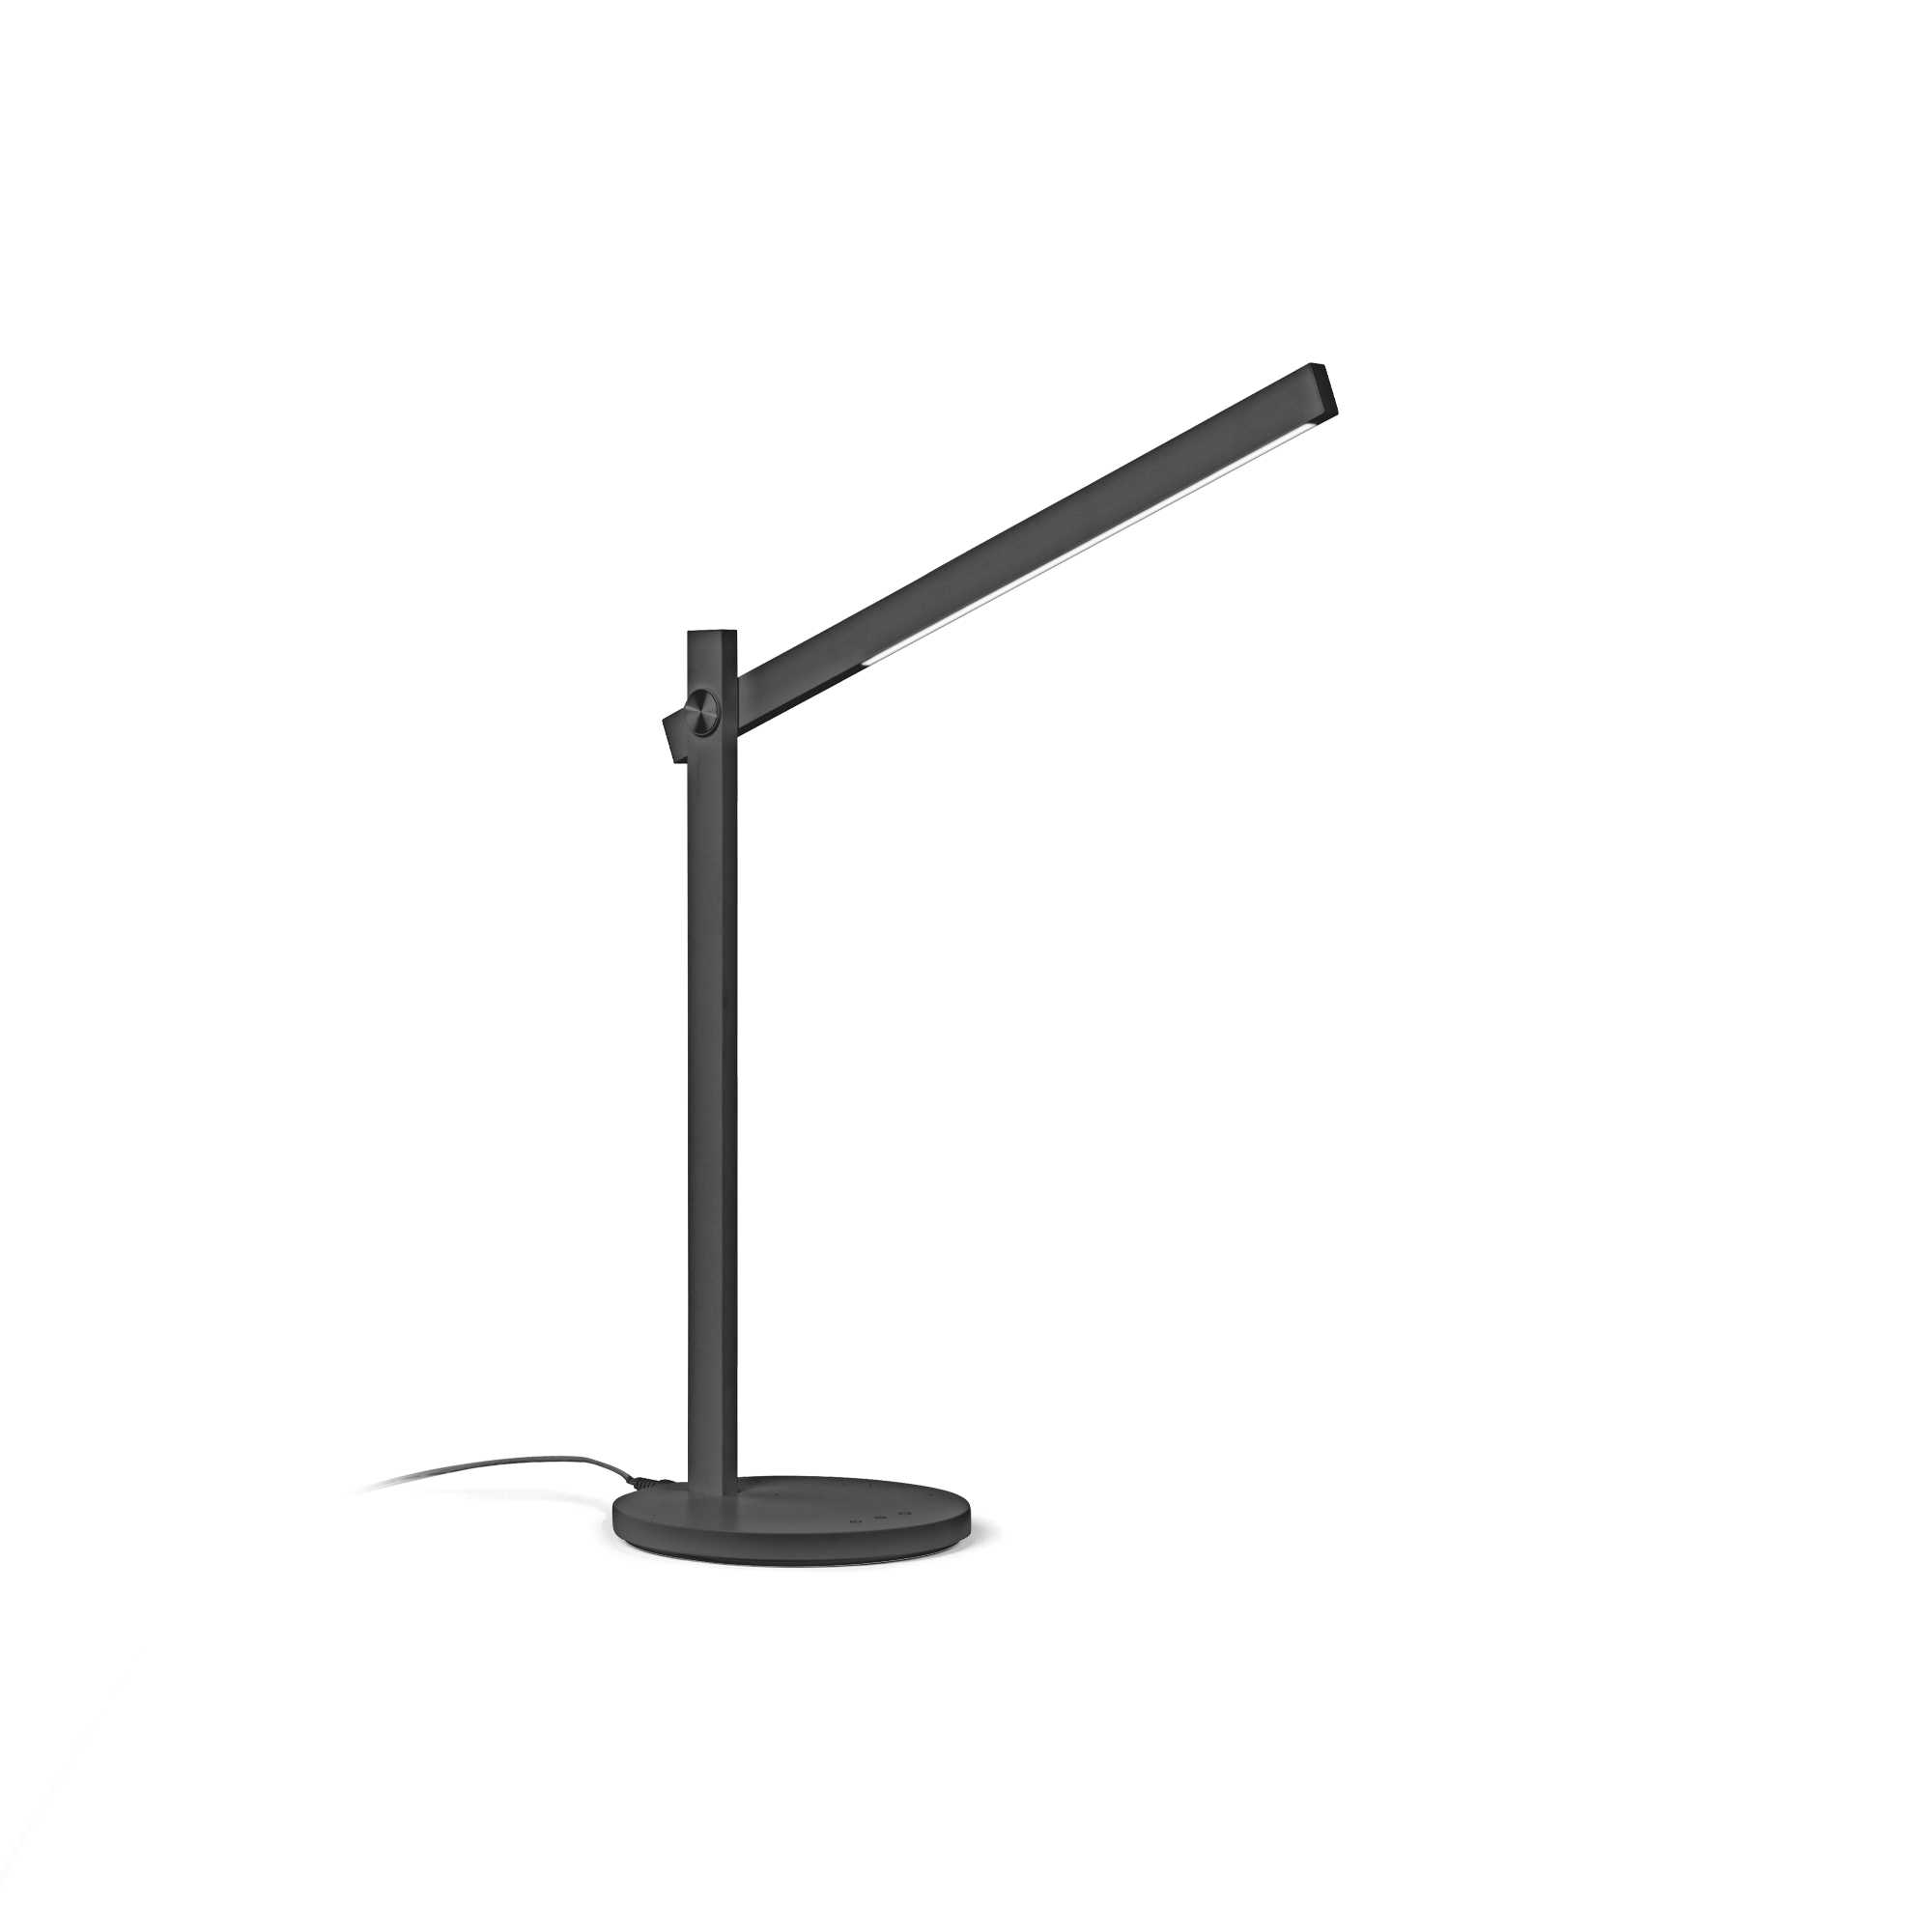 AD hotelska oprema Stolna lampa Pivot tl- Crne boje slika proizvoda